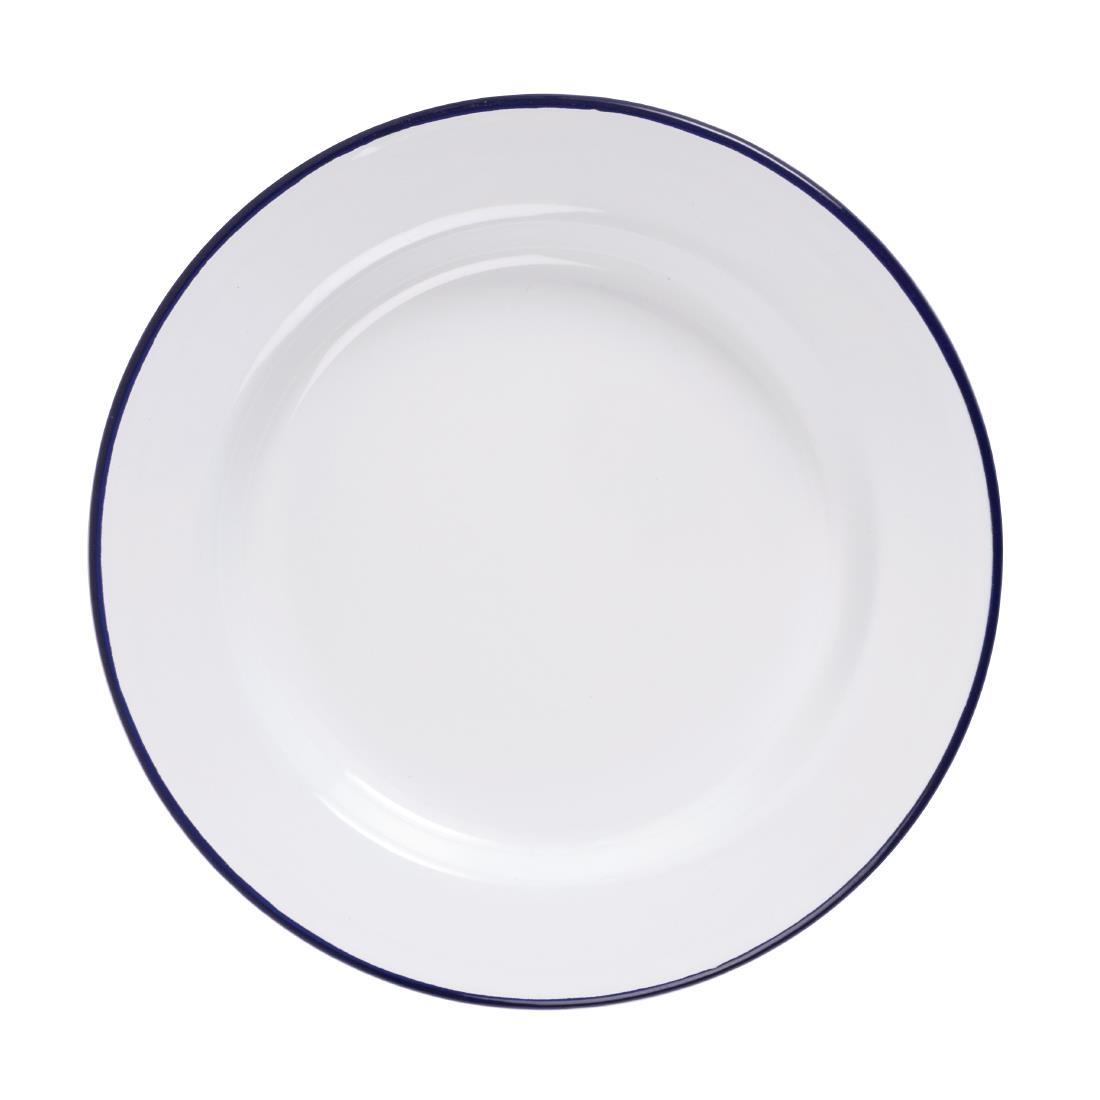 Olympia Enamel Dinner Plates 245mm (Pack of 6) - GM512  - 3